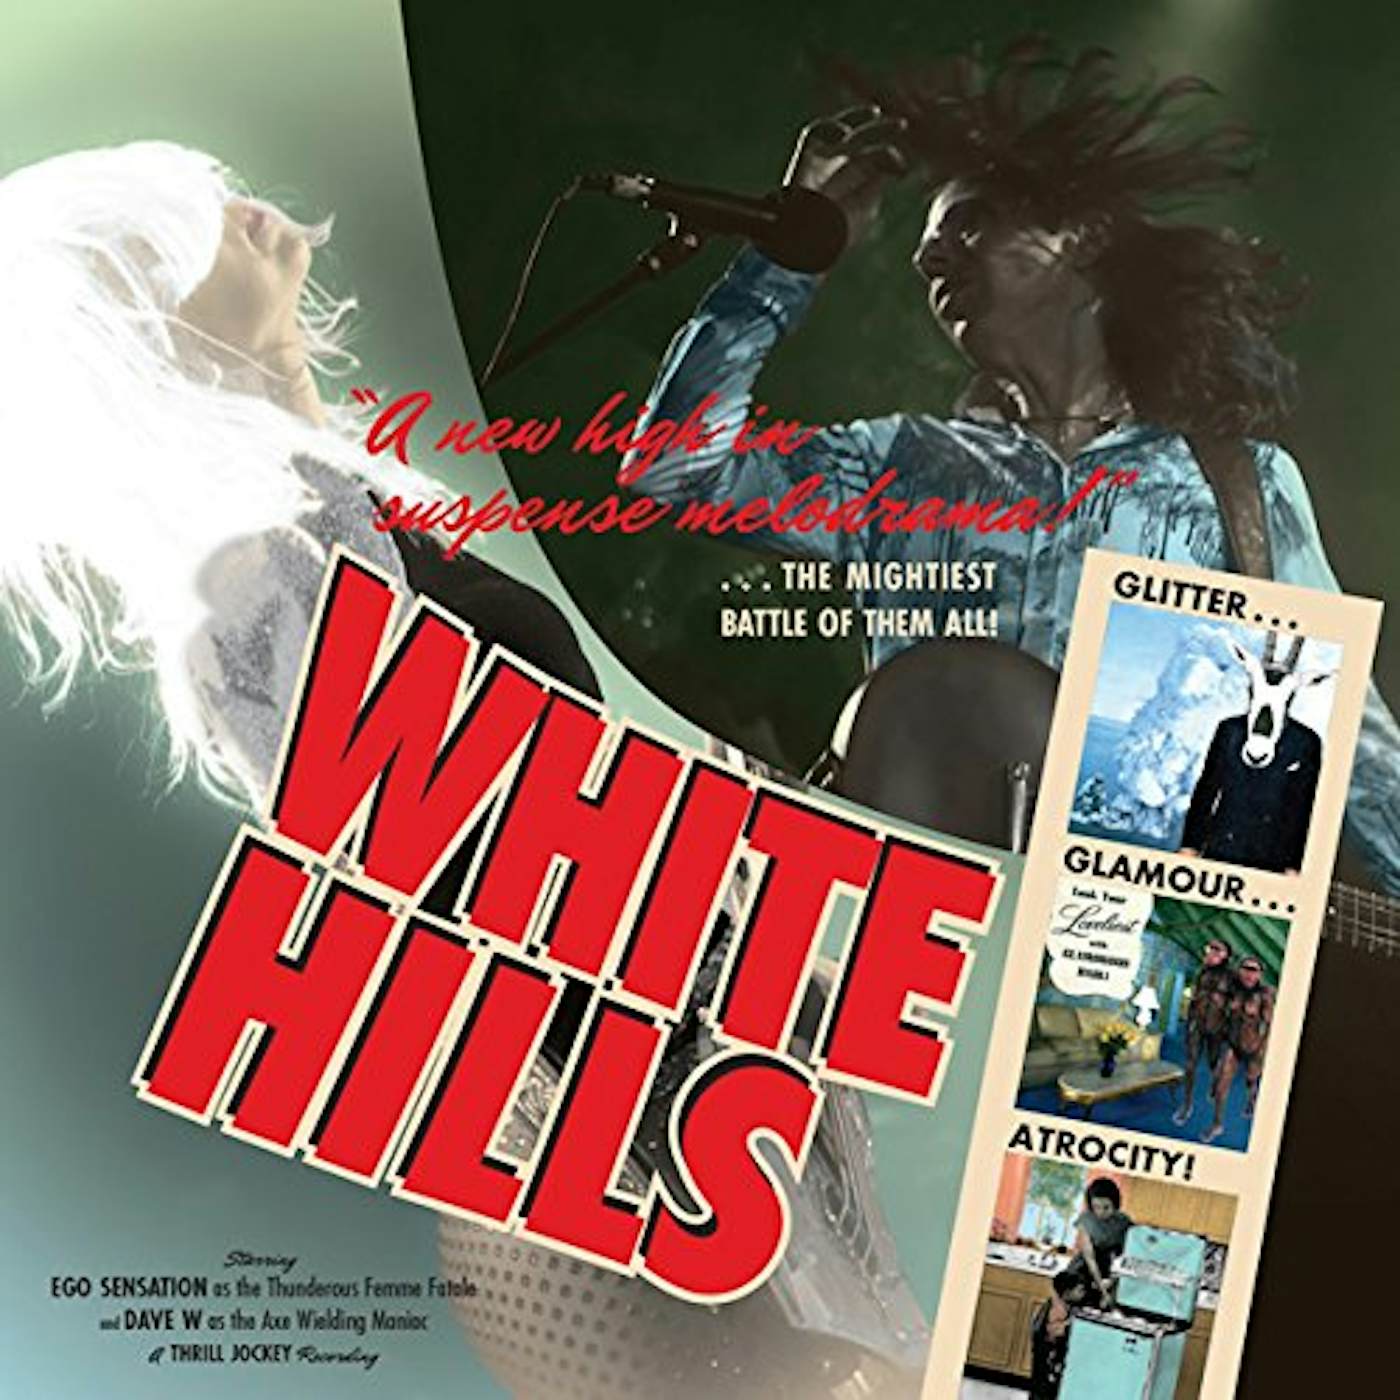 White Hills Glitter Glamour Atrocity Vinyl Record